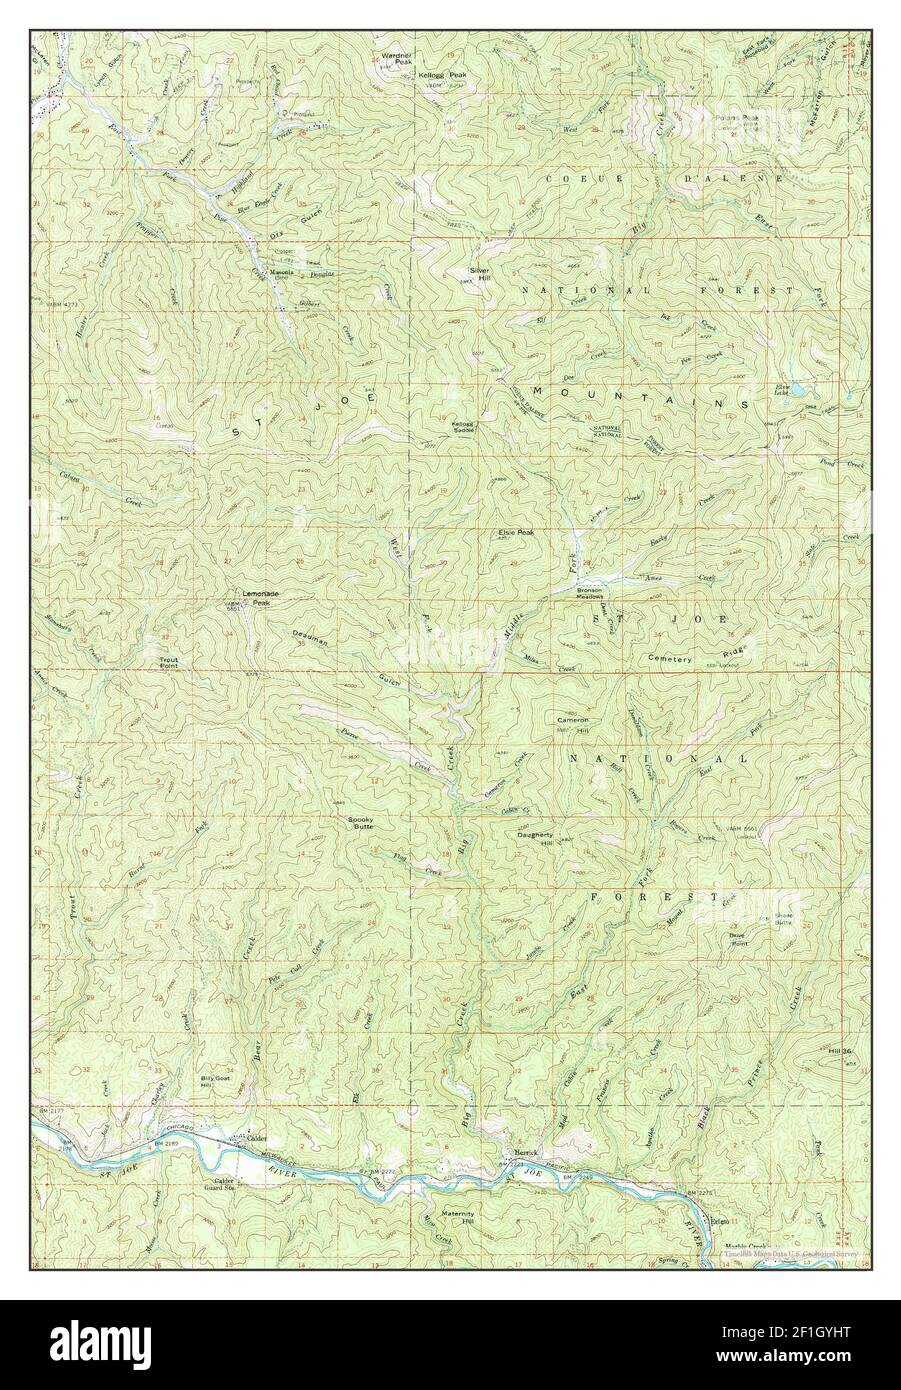 Calder, Idaho, map 1957, 1:62500, United States of America by Timeless Maps, data U.S. Geological Survey Stock Photo